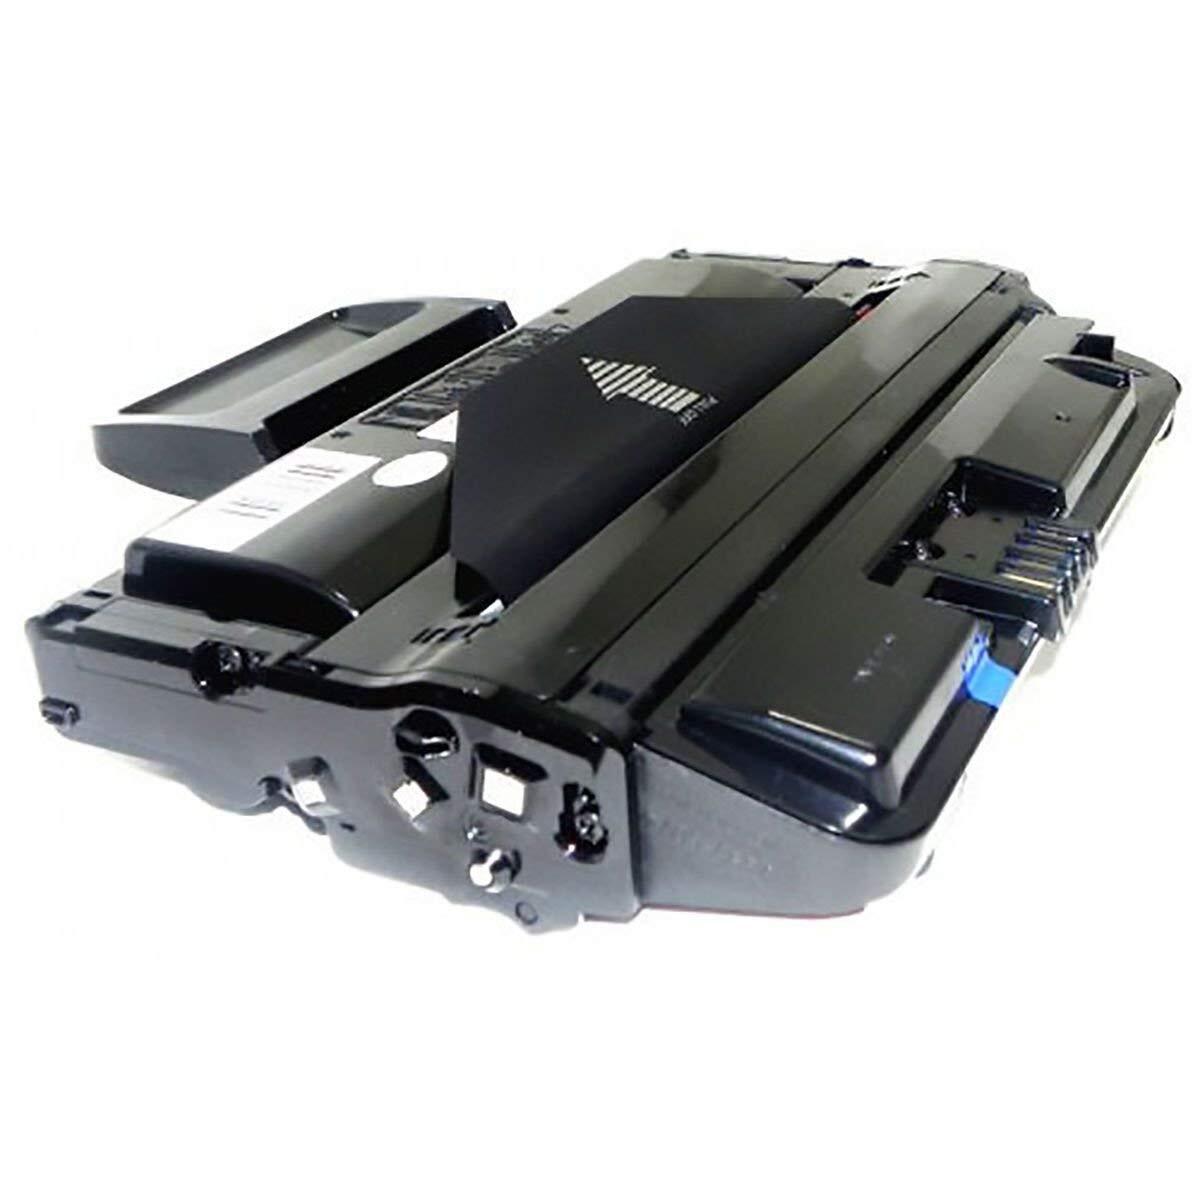 Samsung ML- 2850 Toner Cartridges  For Laser Printer